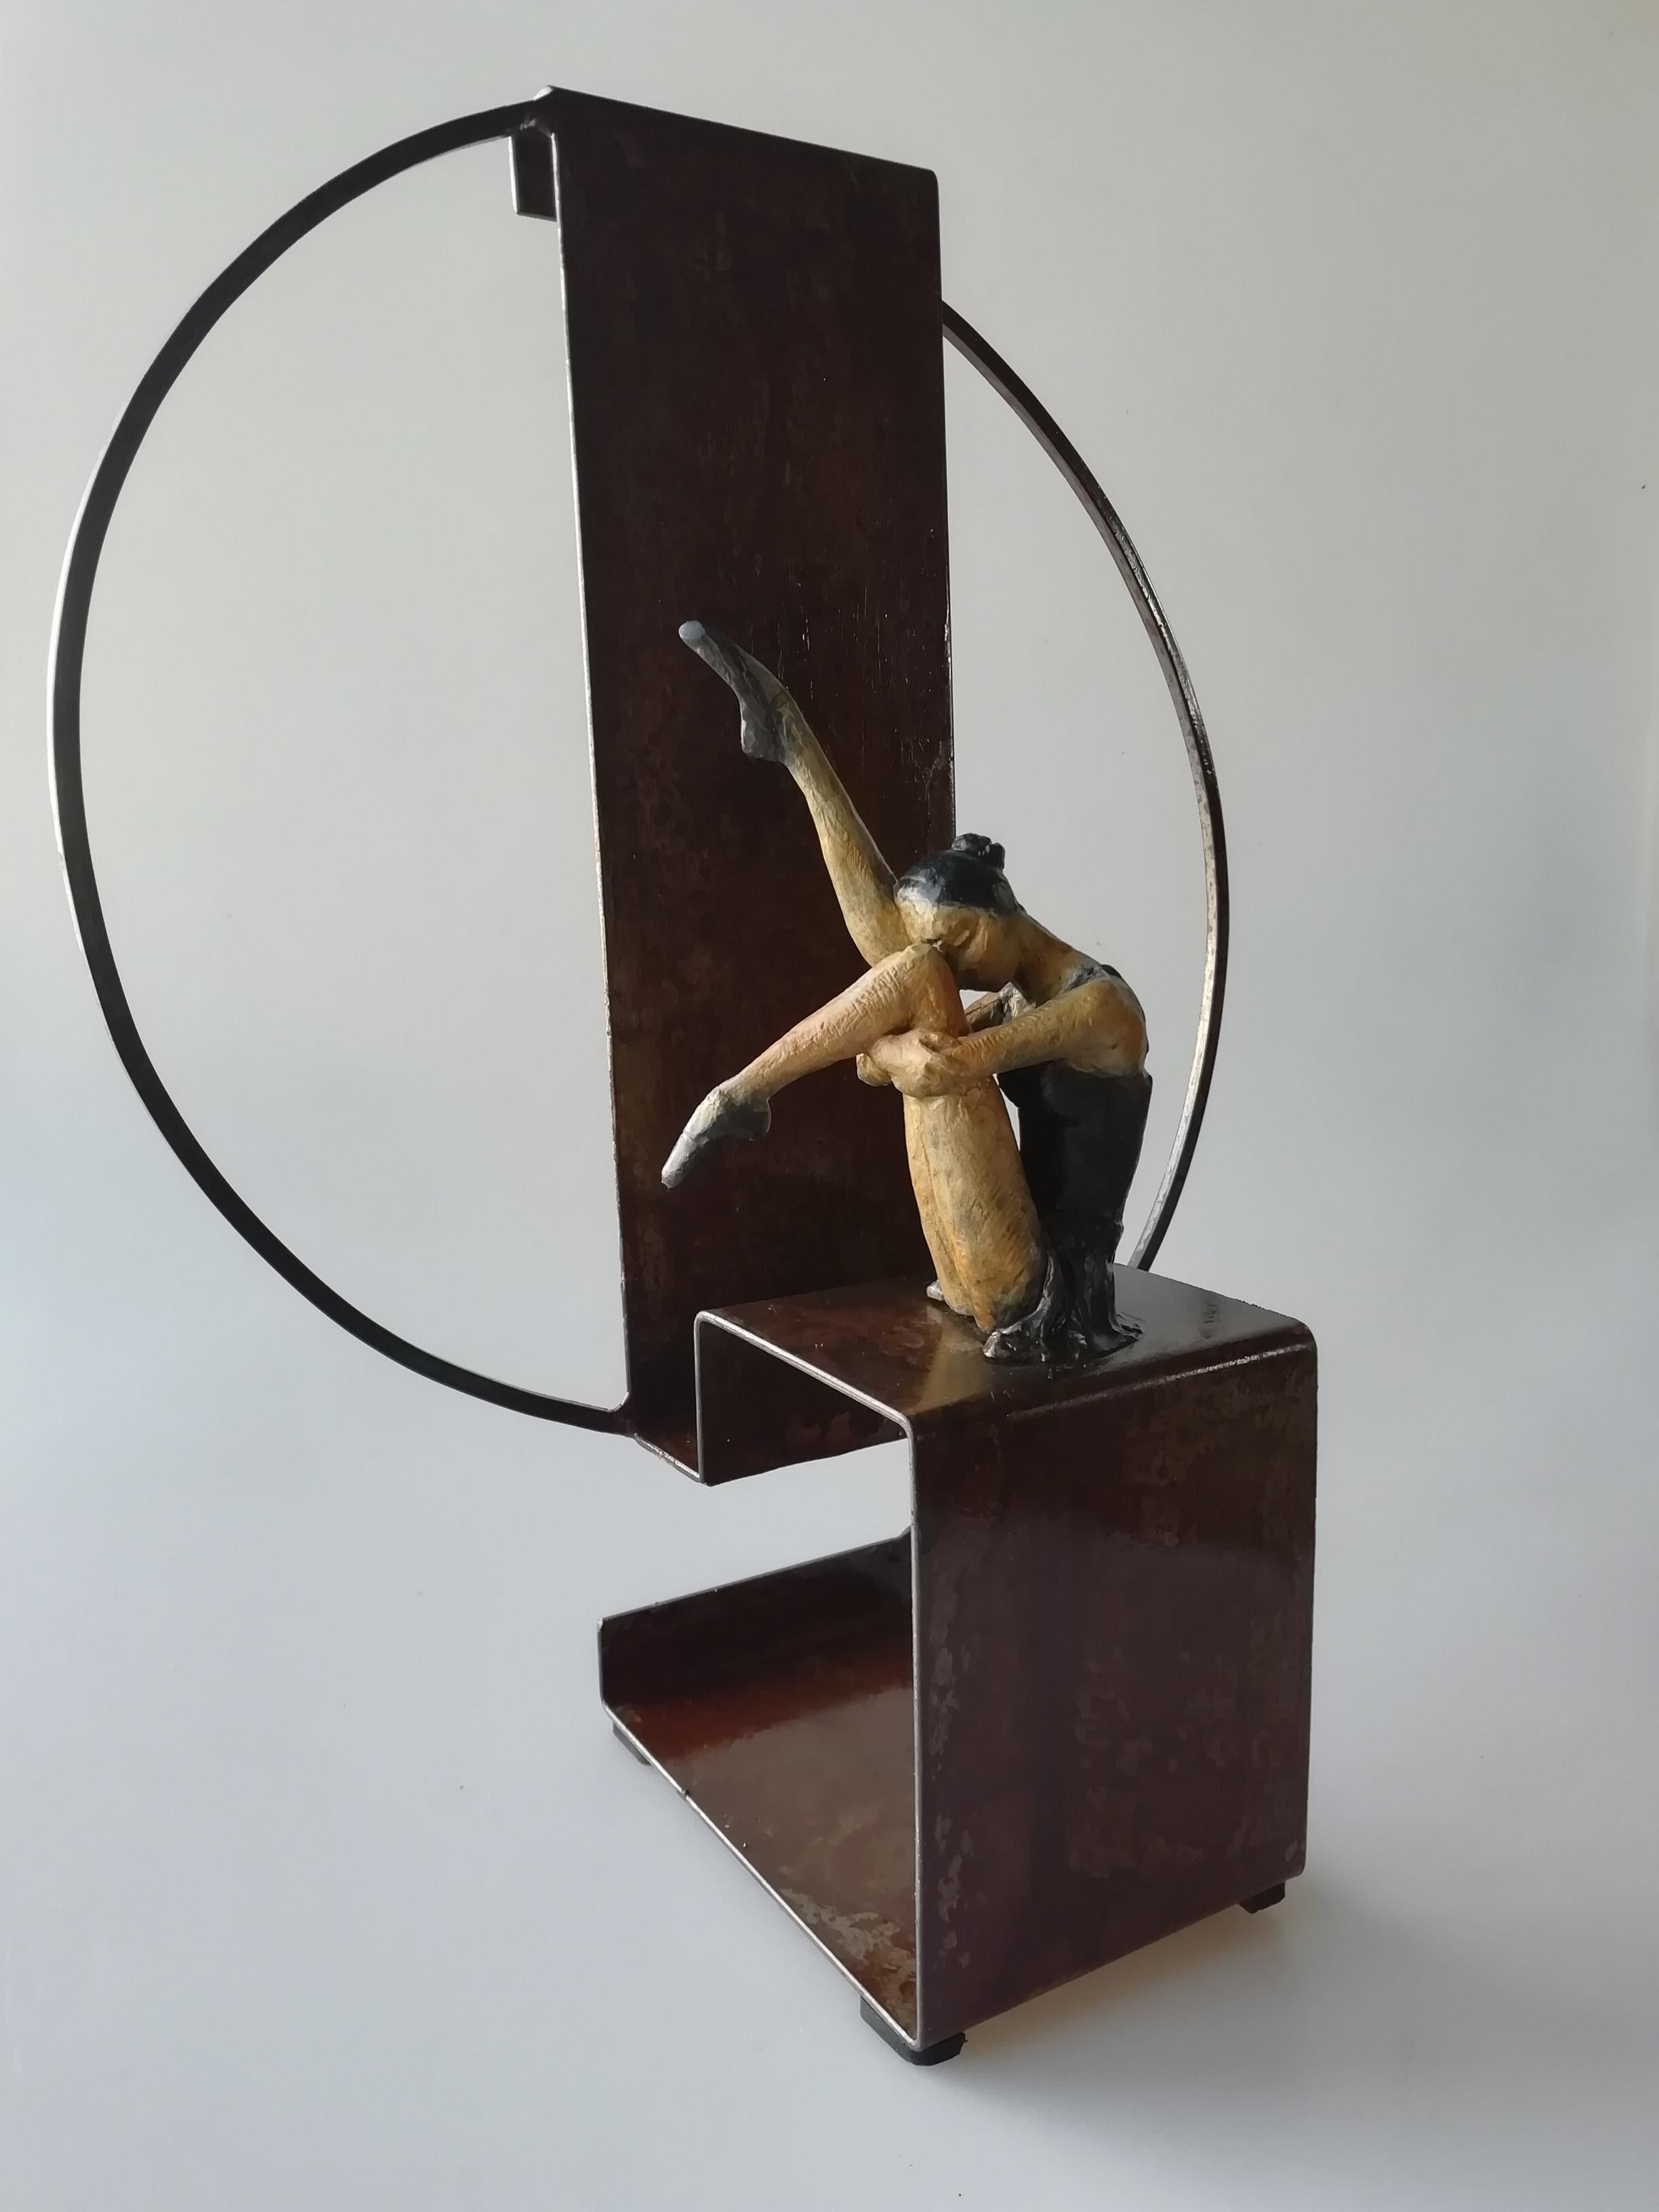 Joan Artigas Planas Figurative Sculpture - "Silence" contemporary bronze table, mural sculpture figurative ballerina relax